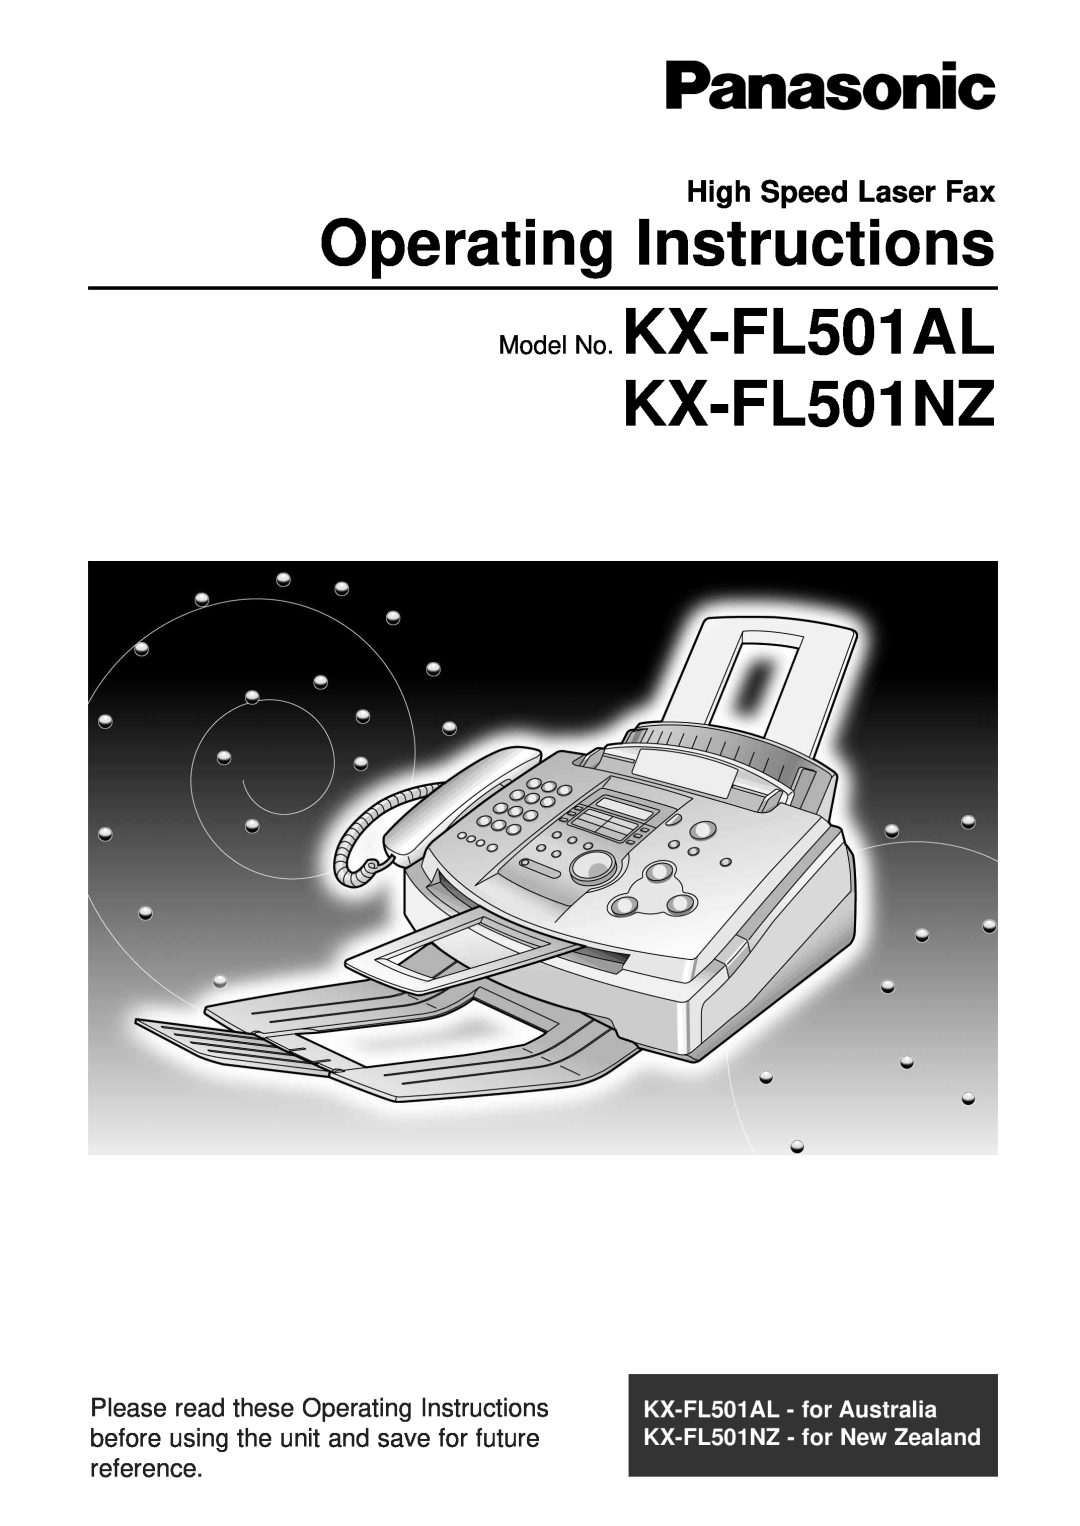 Panasonic KX-FL501NZ manual High Speed Laser Fax, Operating Instructions, Model No. KX-FL501AL, reference 